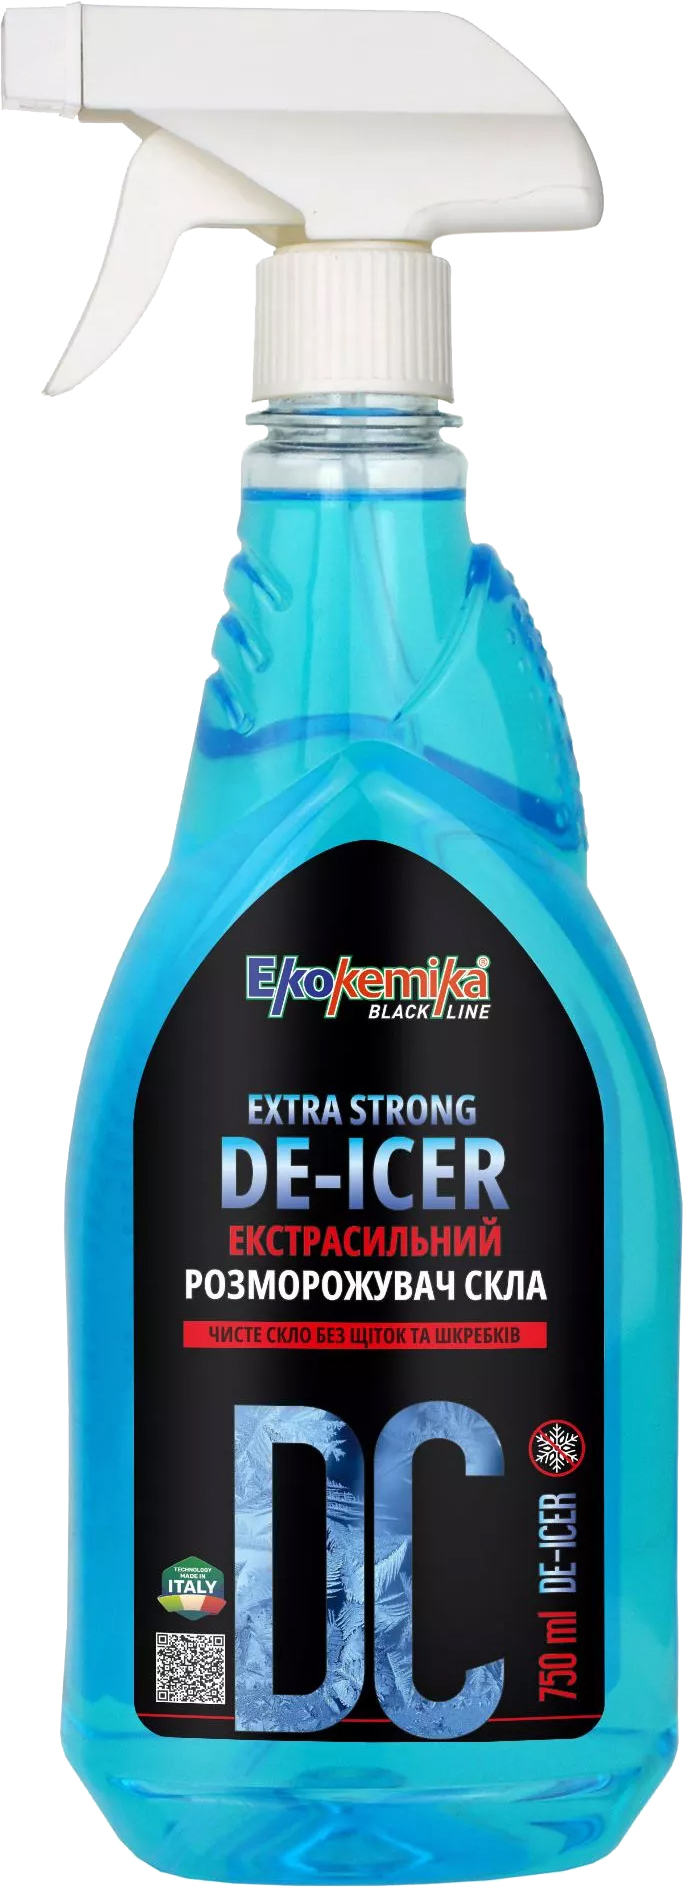 Размораживатель Wurth Super De-Icer Spray 0892331201 500мл купить